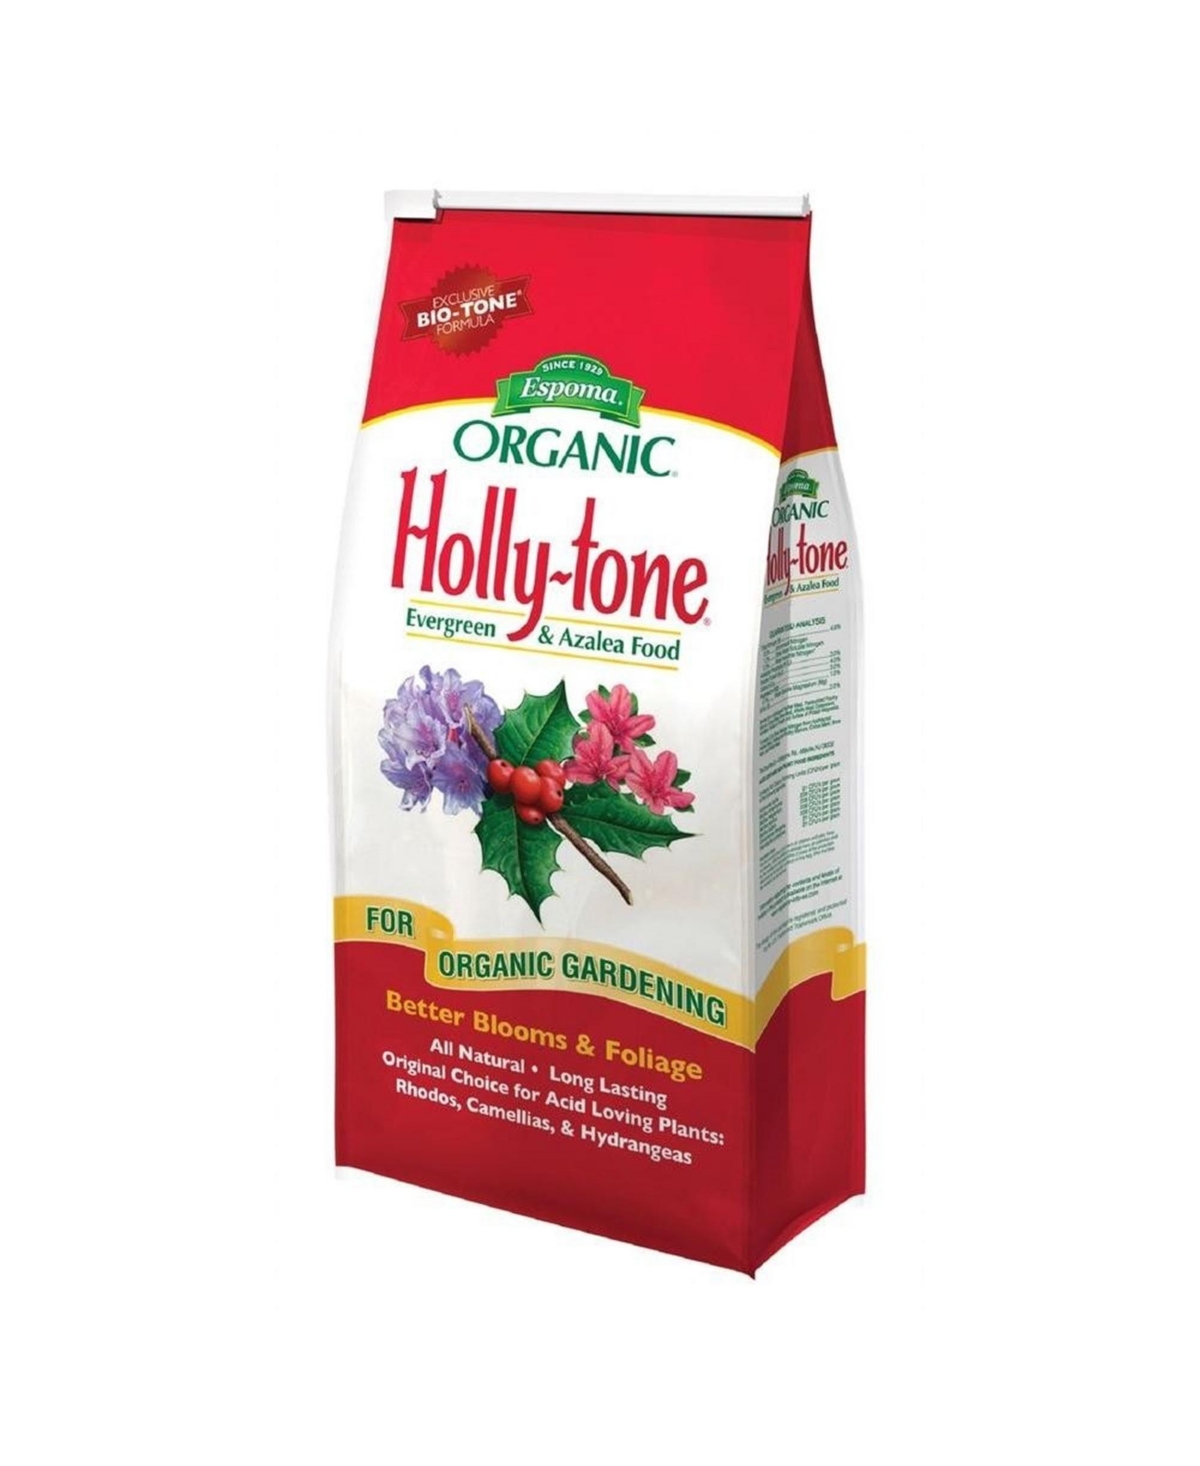 Organic Holly-tone Evergreen and Azalea Food, 36lb - Brown